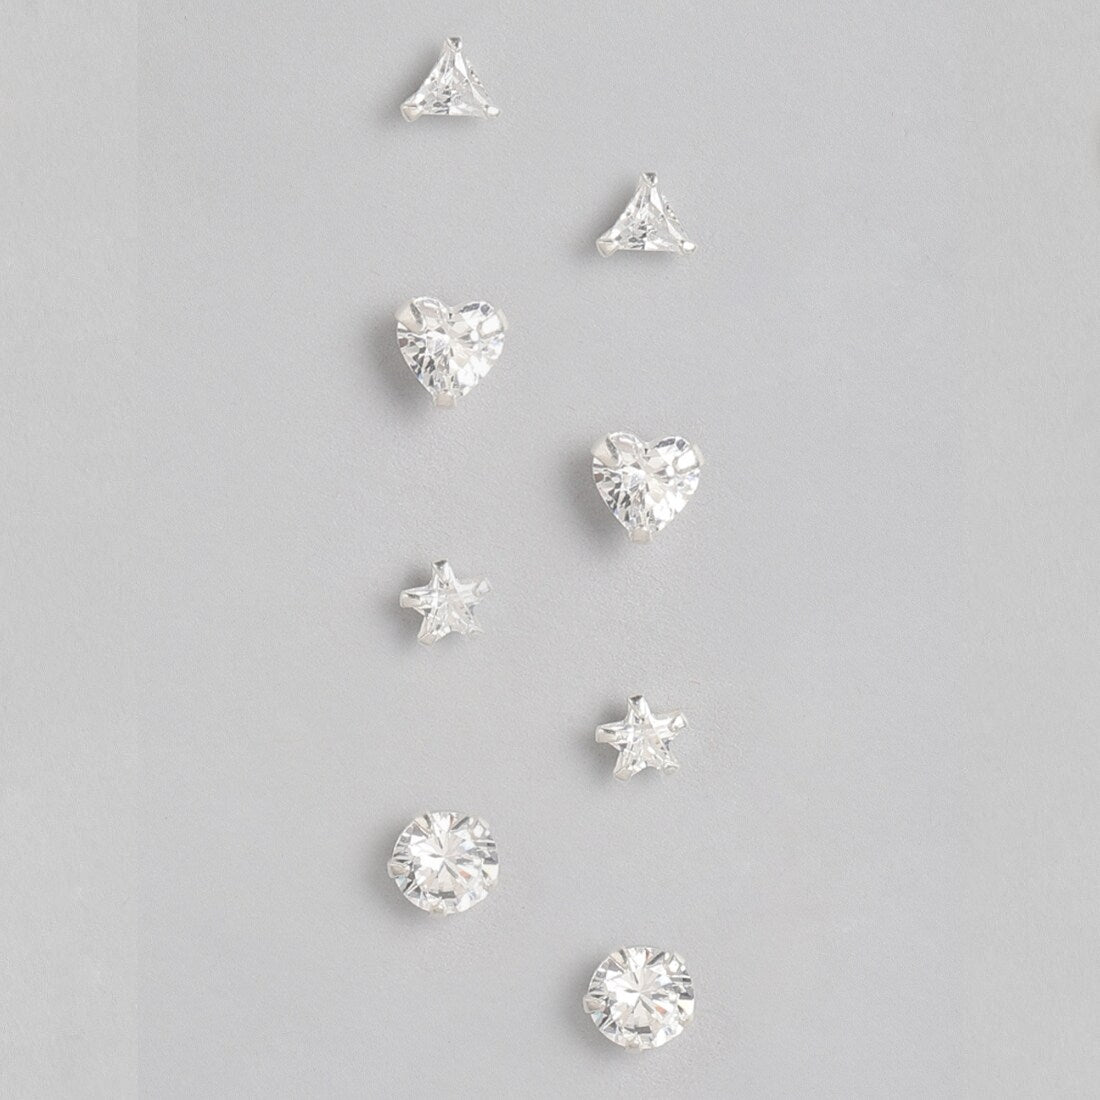 Minimal 925 Silver Earrings, Set of 4